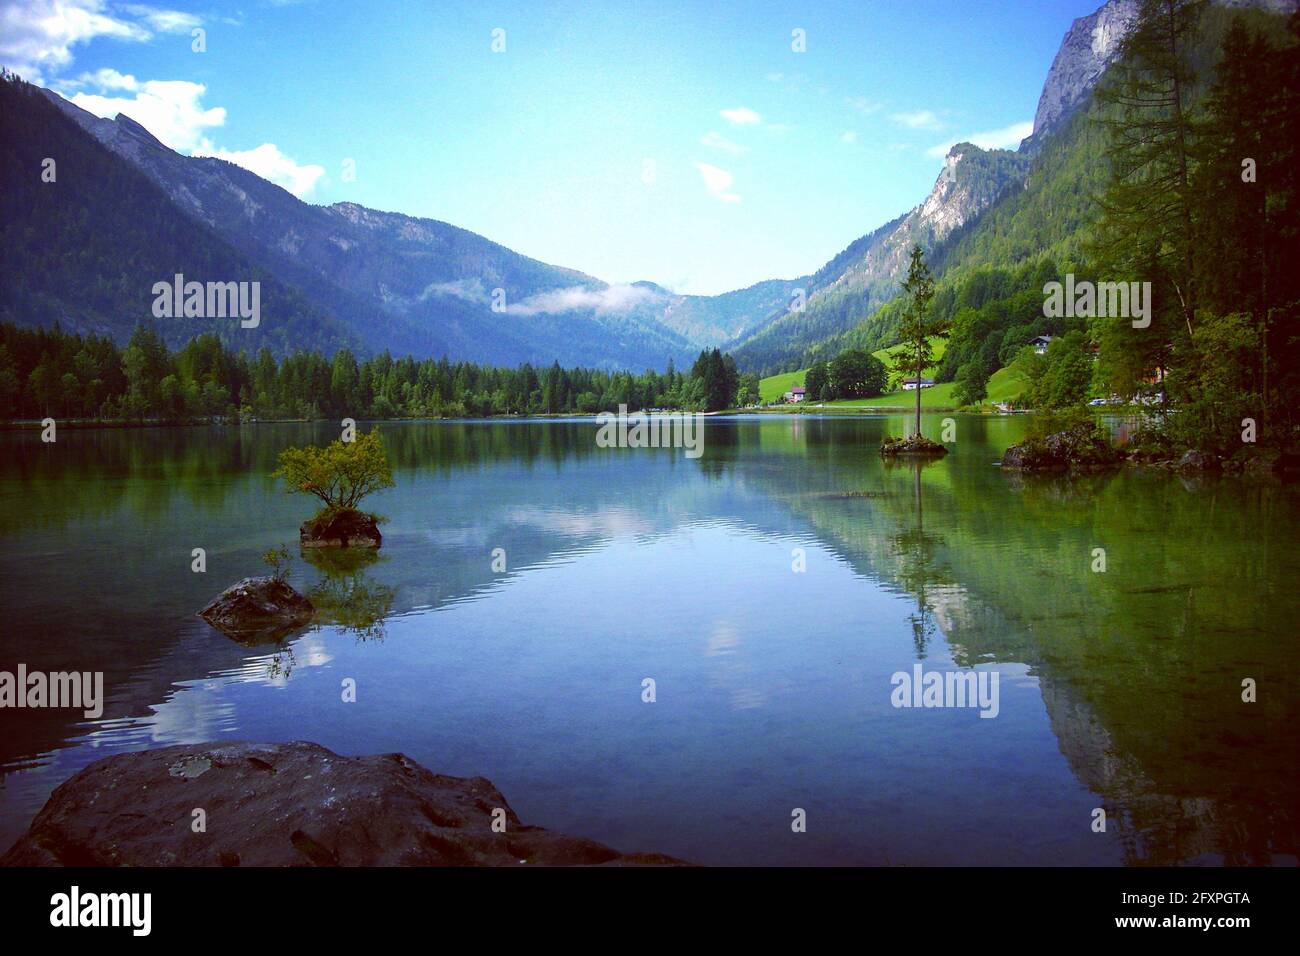 Affacciato sul lago Hintersee, sulle Alpi Bavaresi, in Germania. Am Hintersee bei Berchtesgaden, nahe Ramsau, Oberbayern, Bayern, Deutschland. Foto Stock